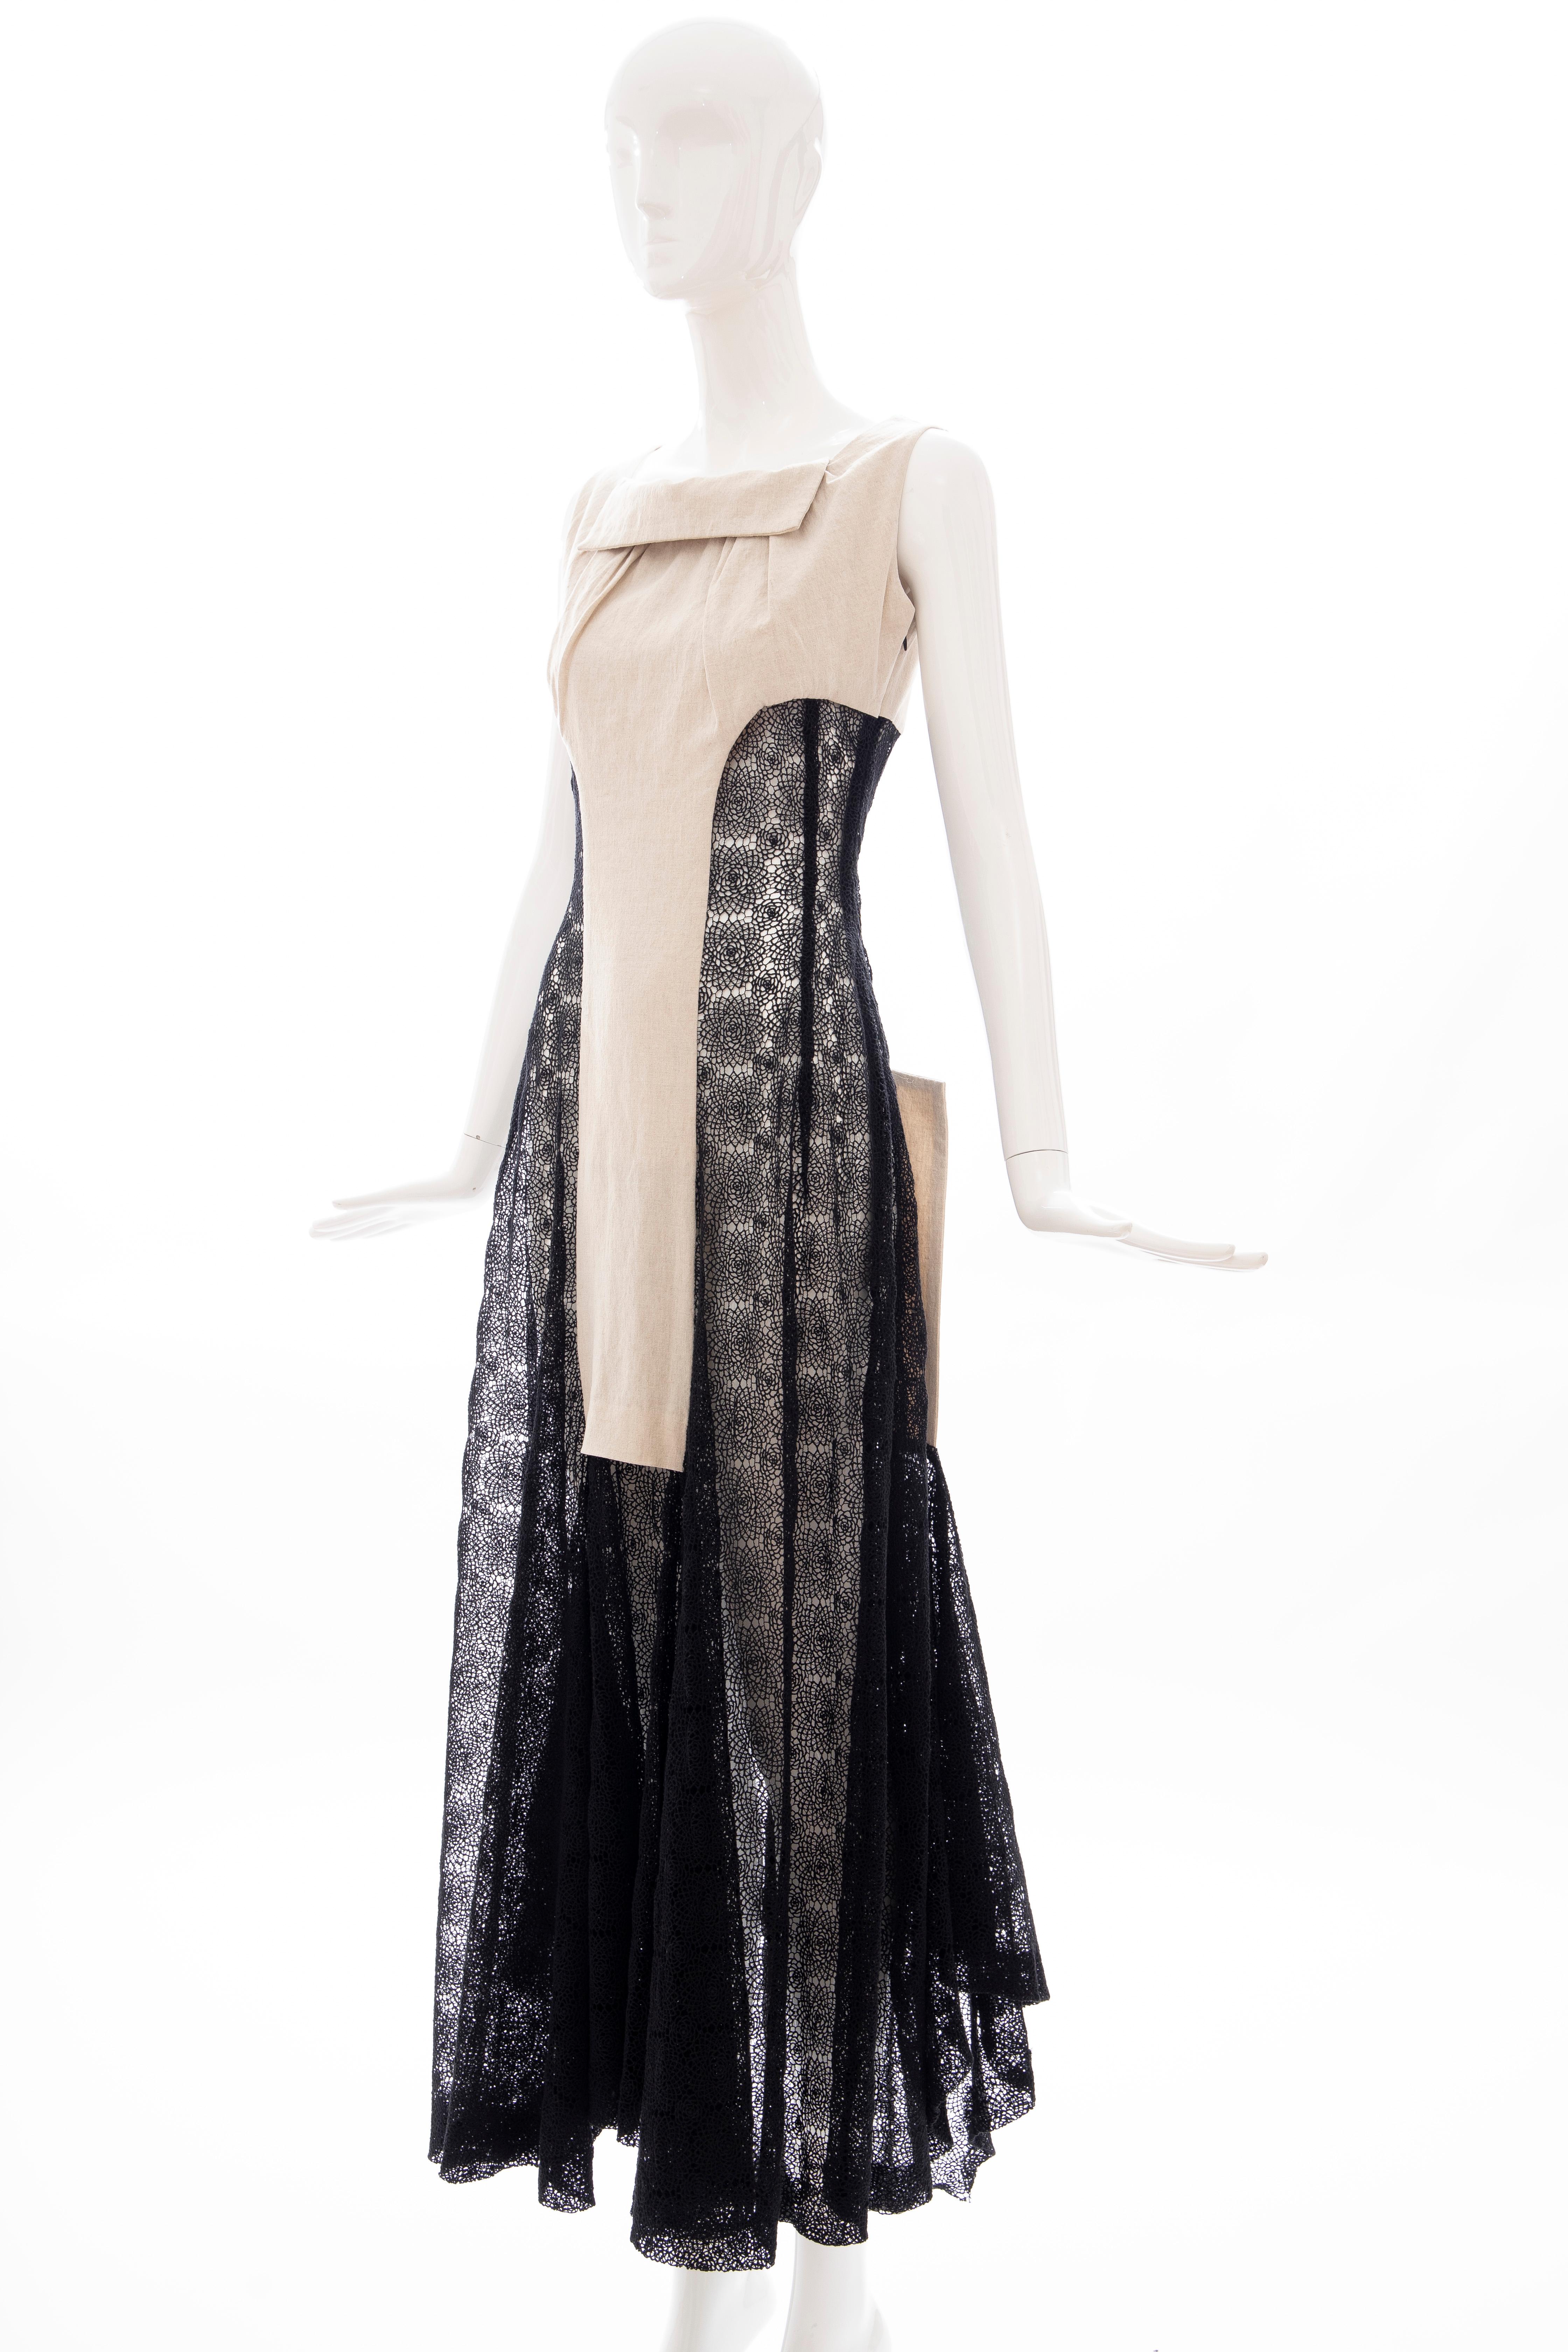 Yohji Yamamoto Runway Black Cotton Lace & Natural Linen Dress, Spring 2005 13